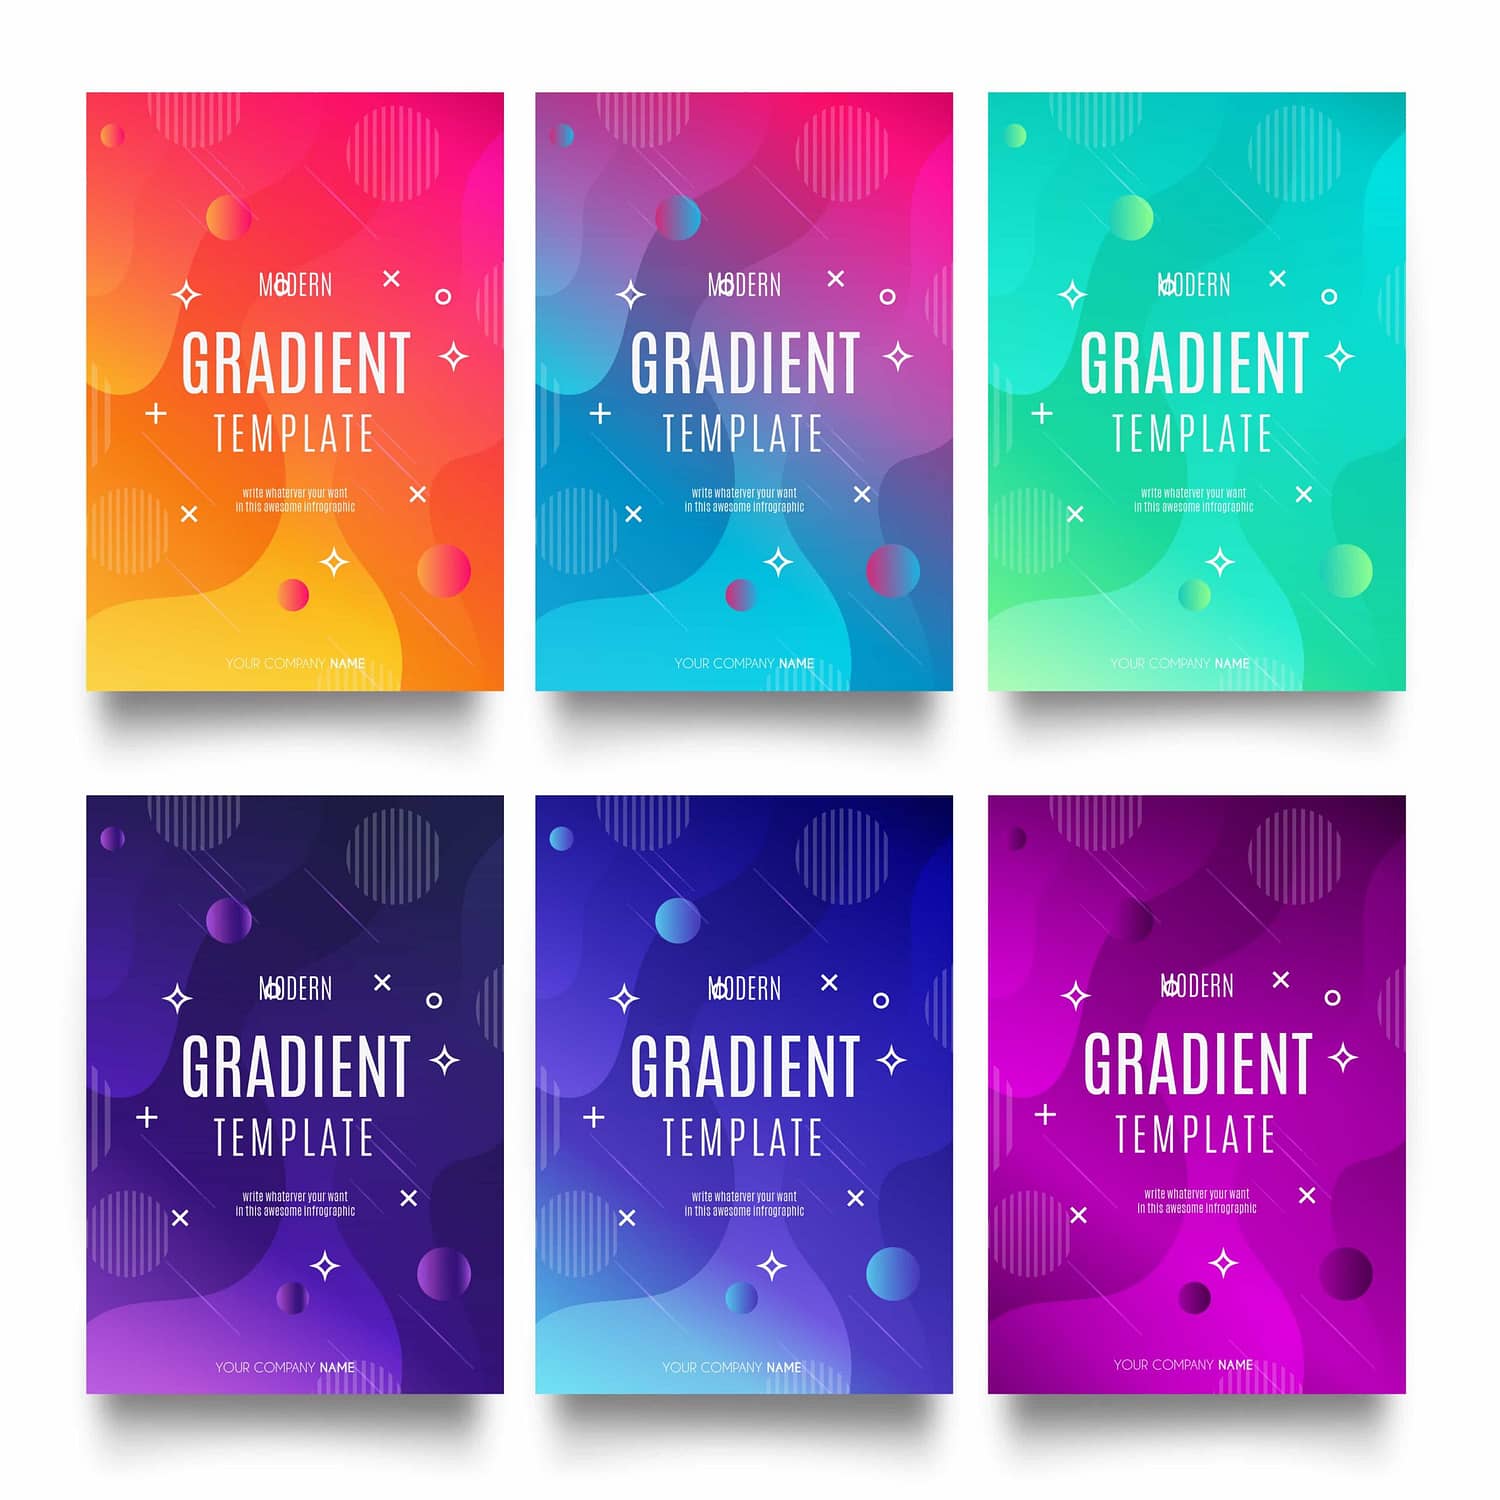 Gradient (1st in Latest in Web Design Trends 2021)